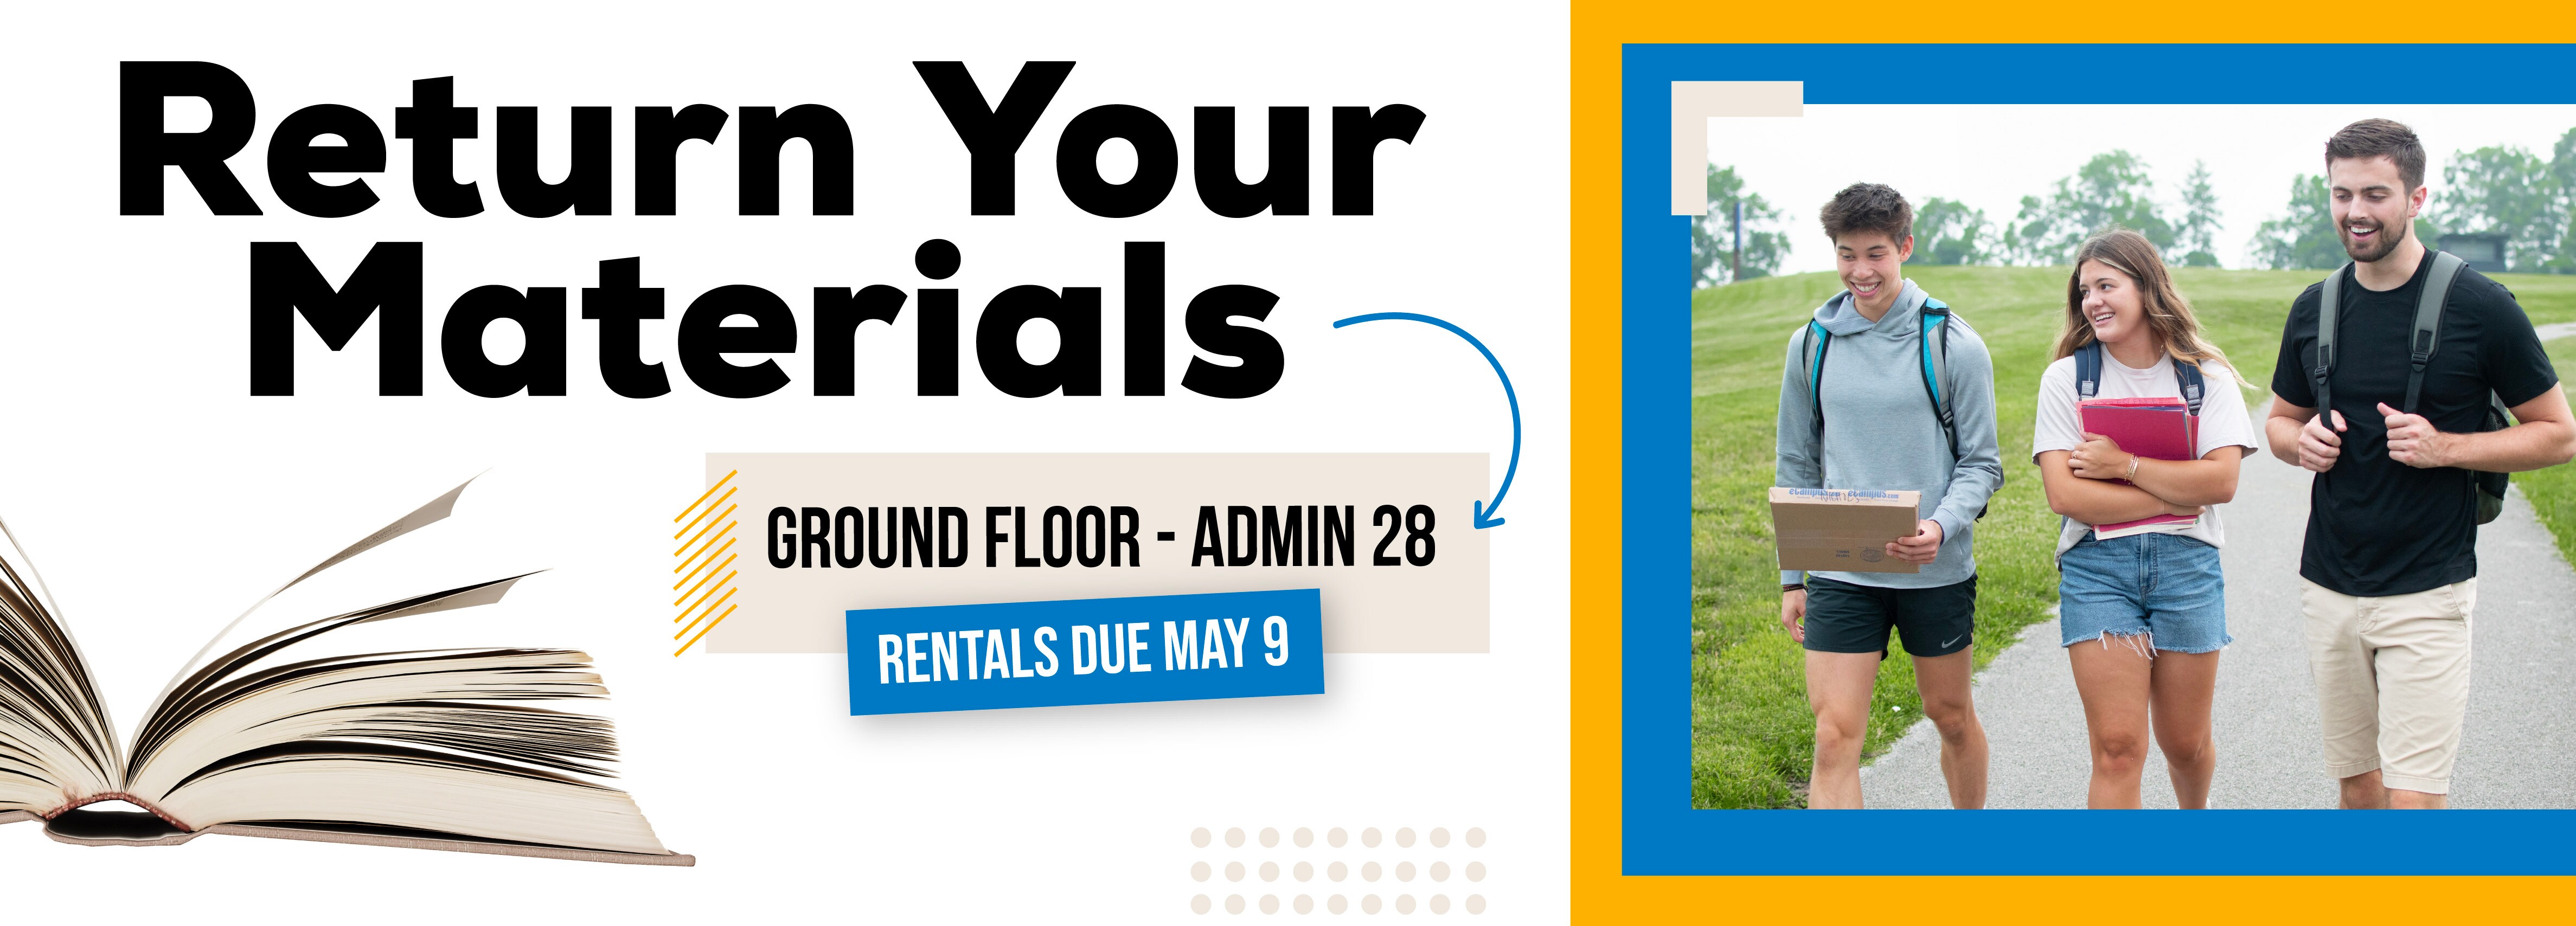 Return Your Materials Ground floor - Admin 28  Rentals Due May 9